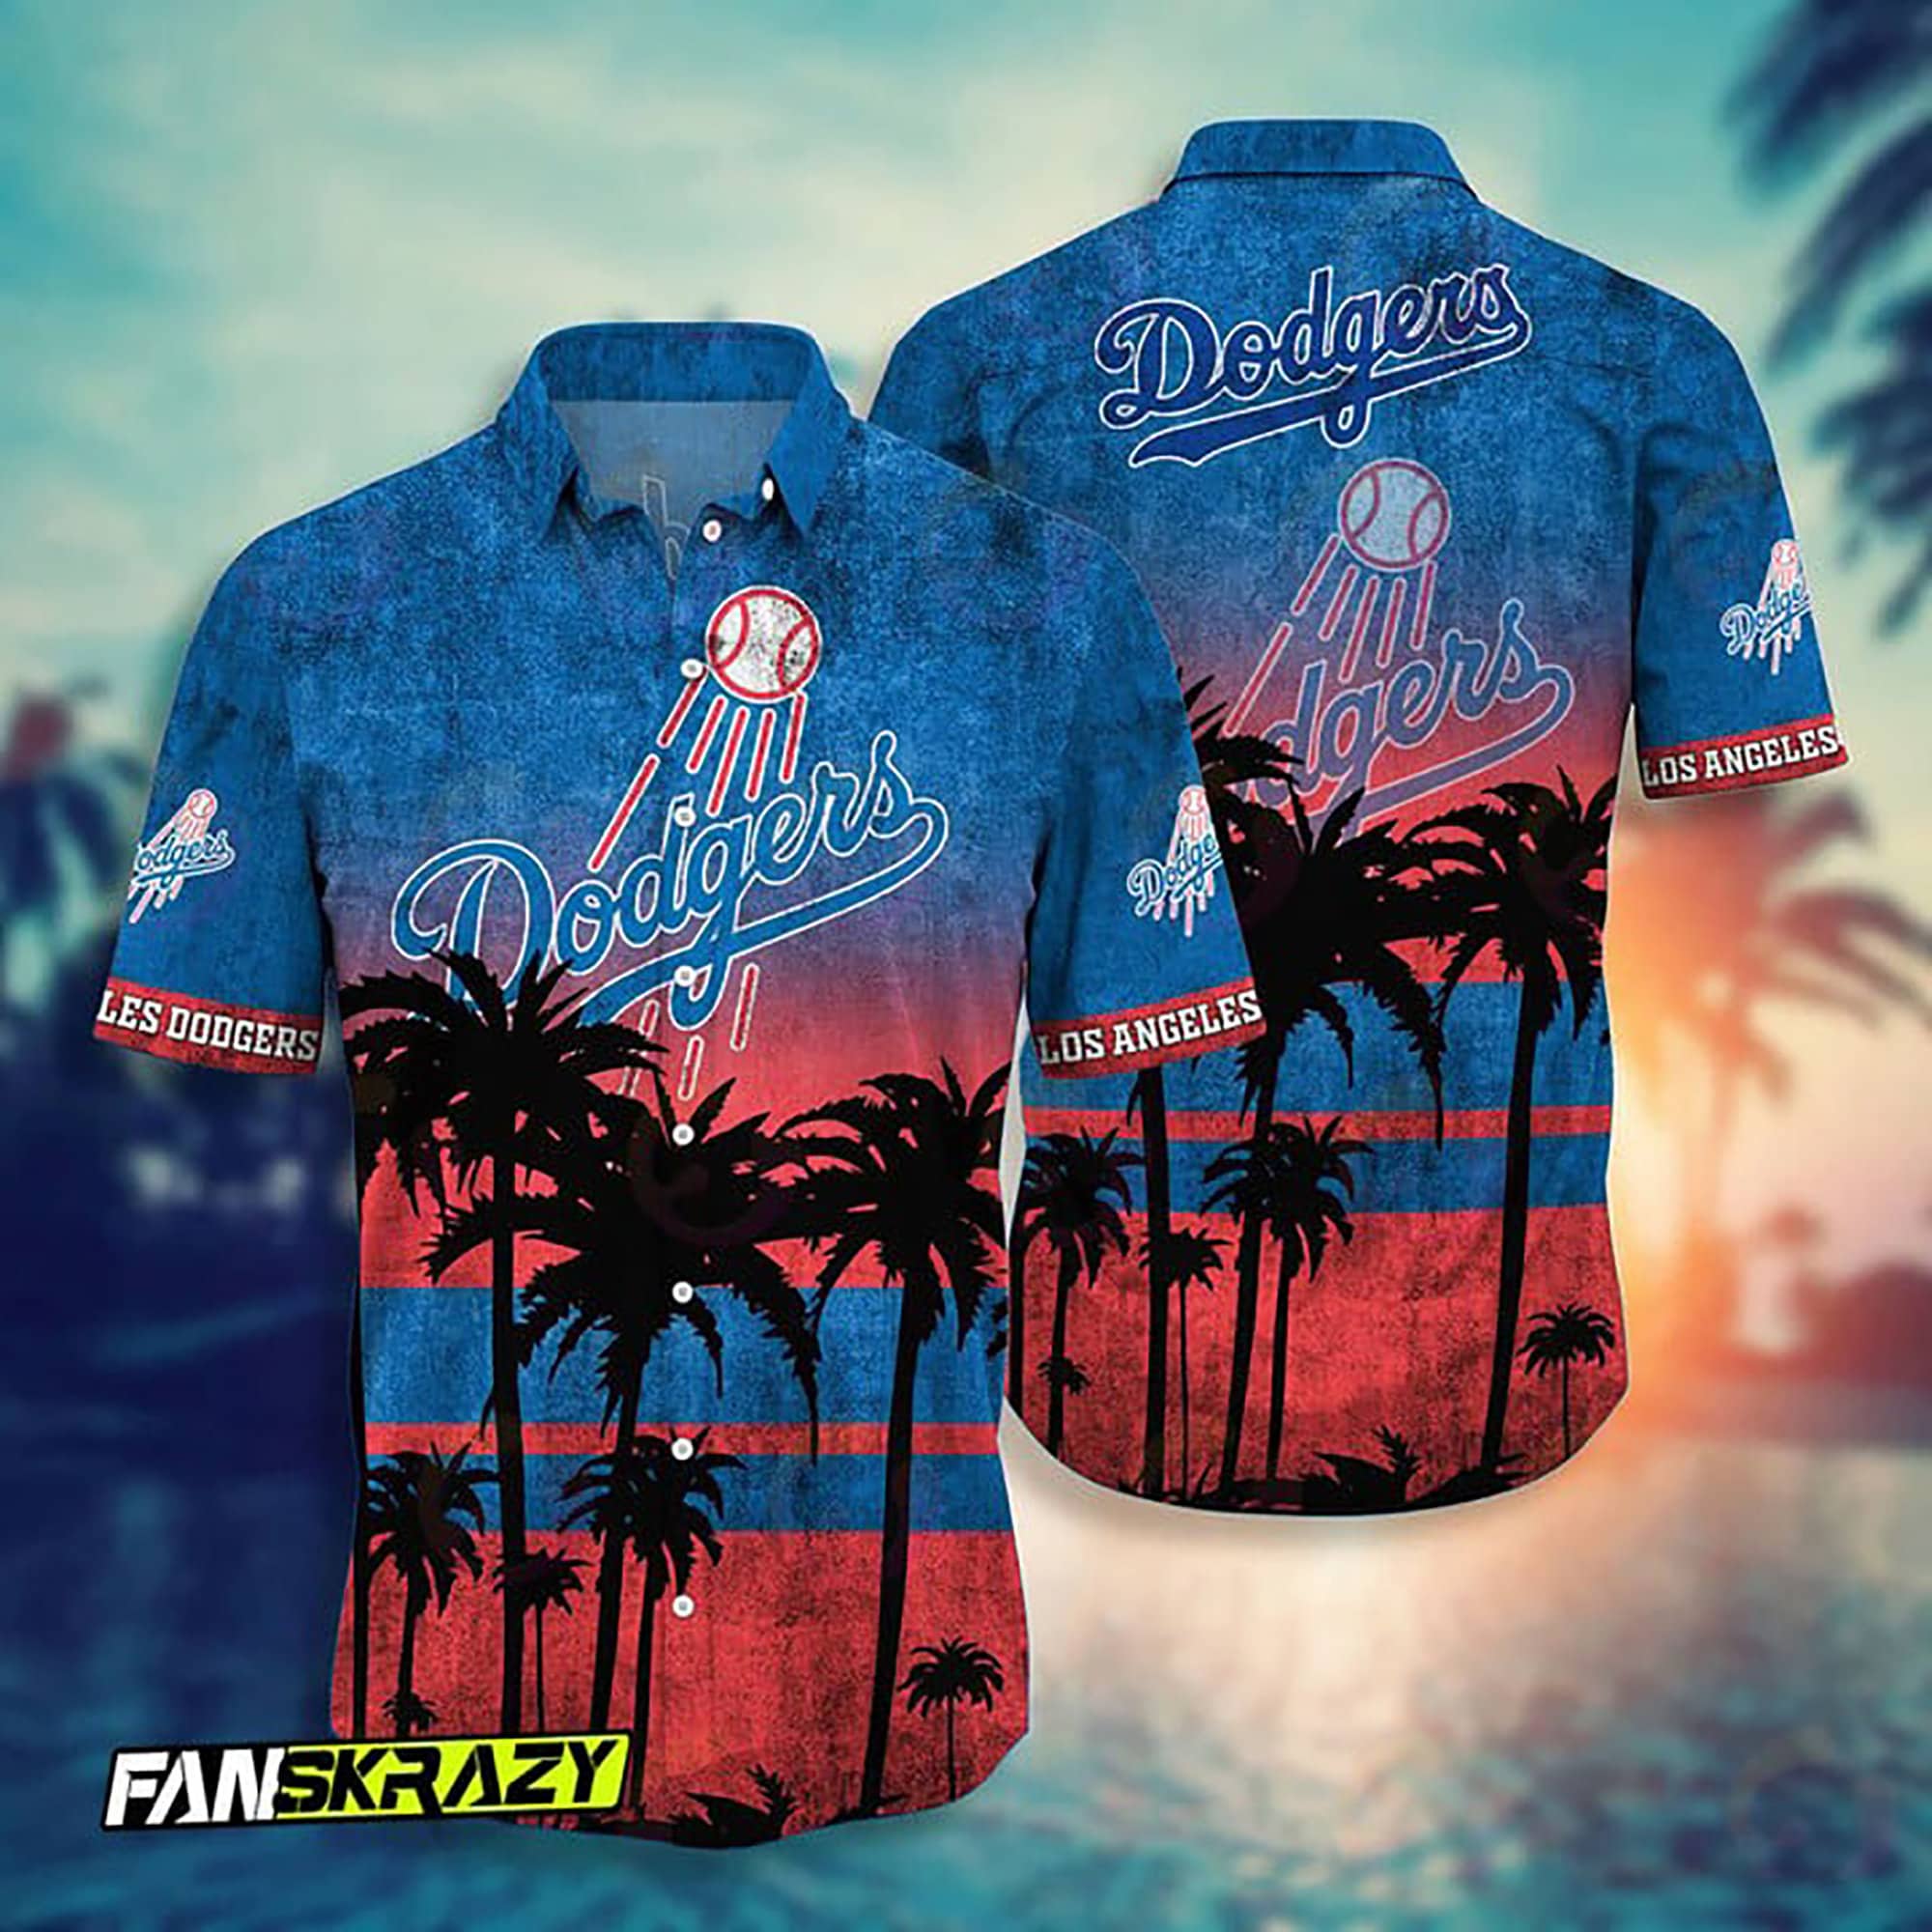 Los Angeles Dodgers Summer Beach 1 T-Shirt - Mens